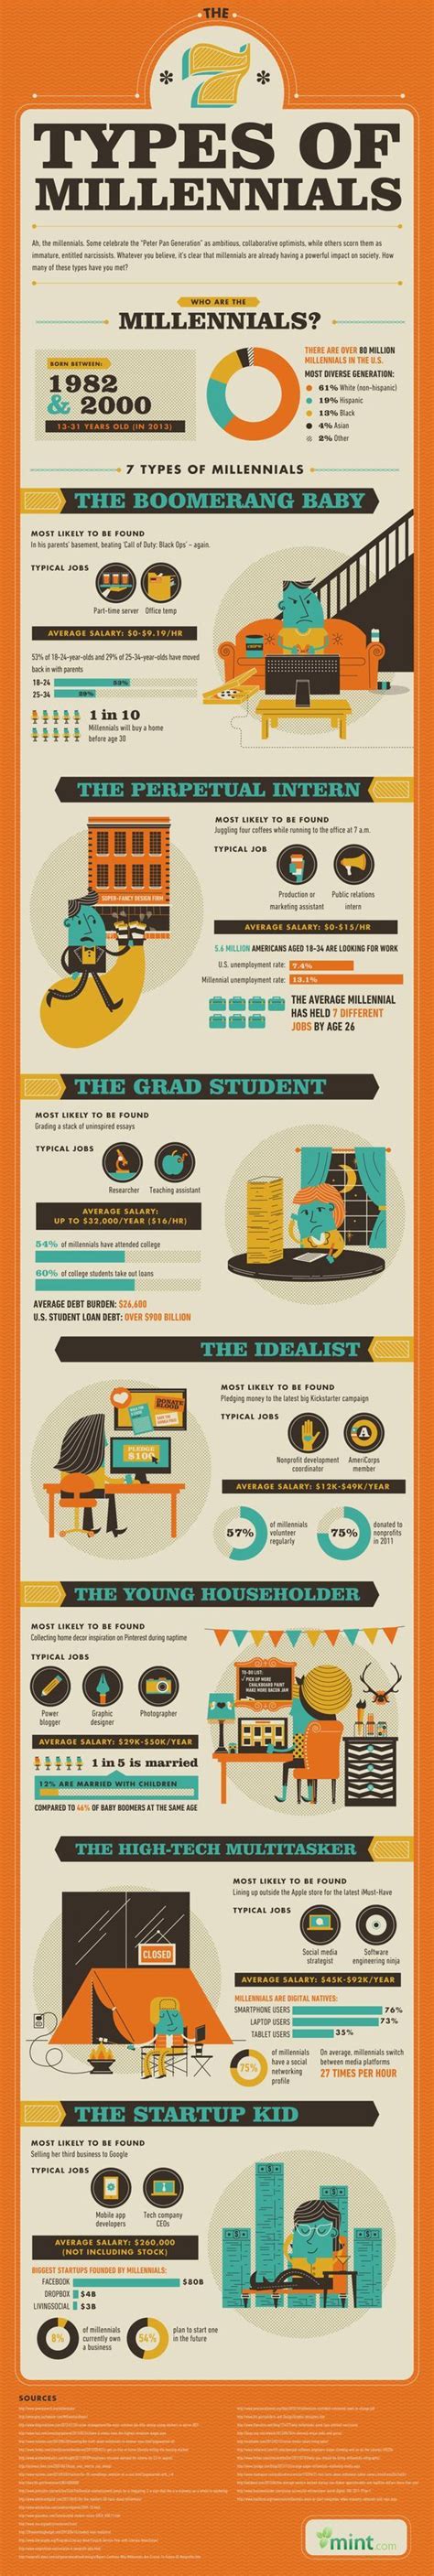 Infographic Infographic Marketing Millennials Generation